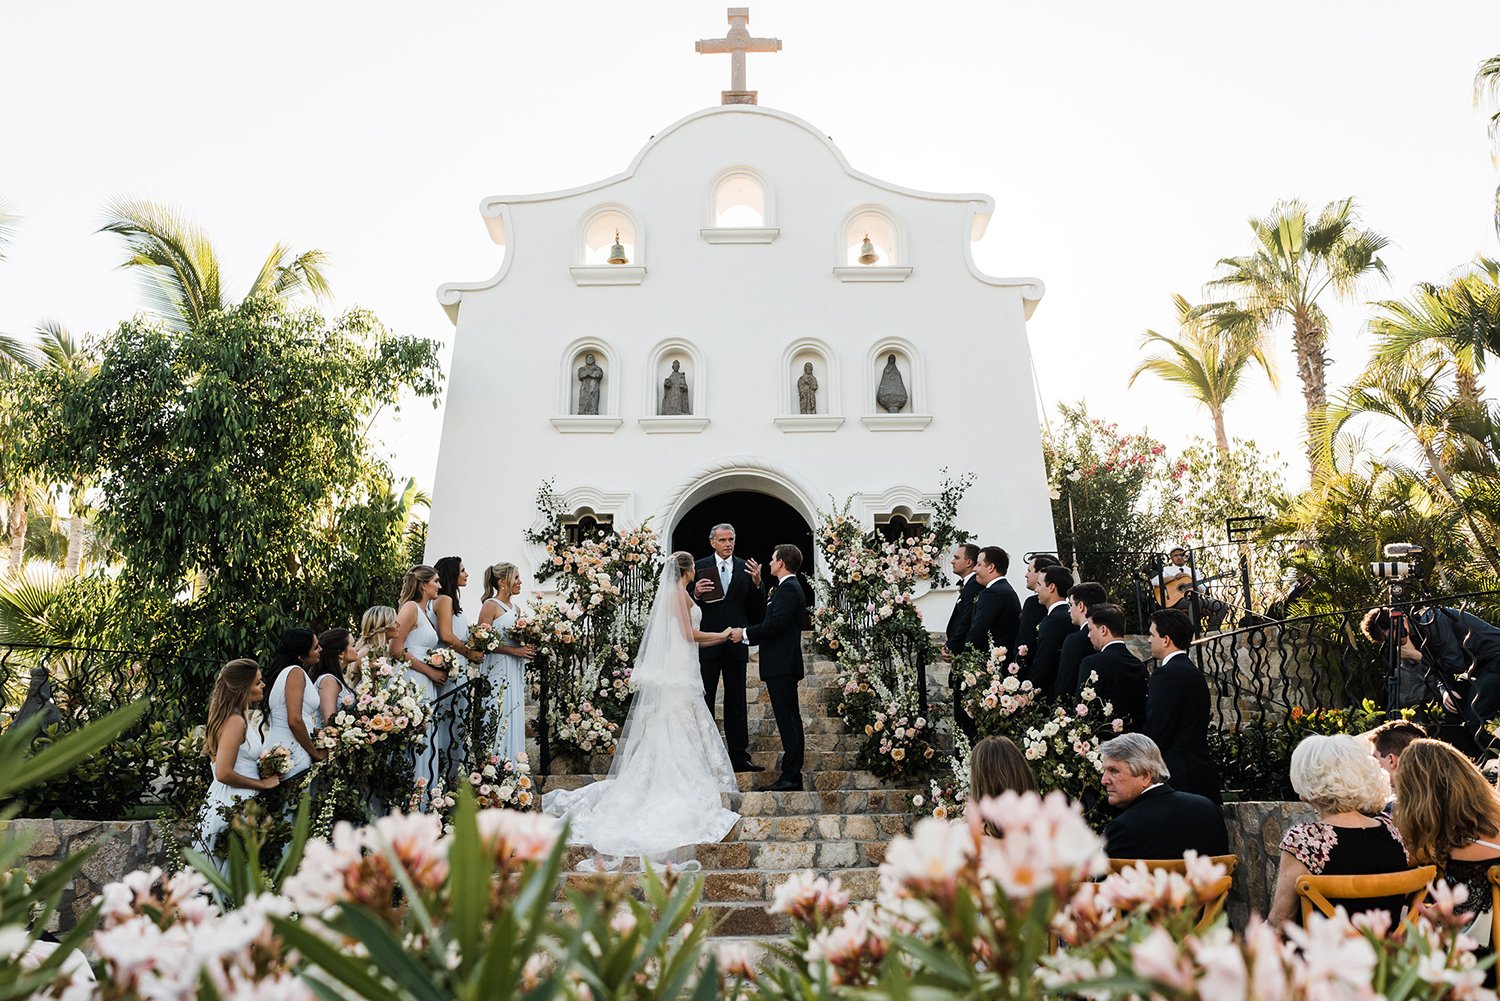 stucco, chapel wedding ceremony in mexico - flowers - blush, cream